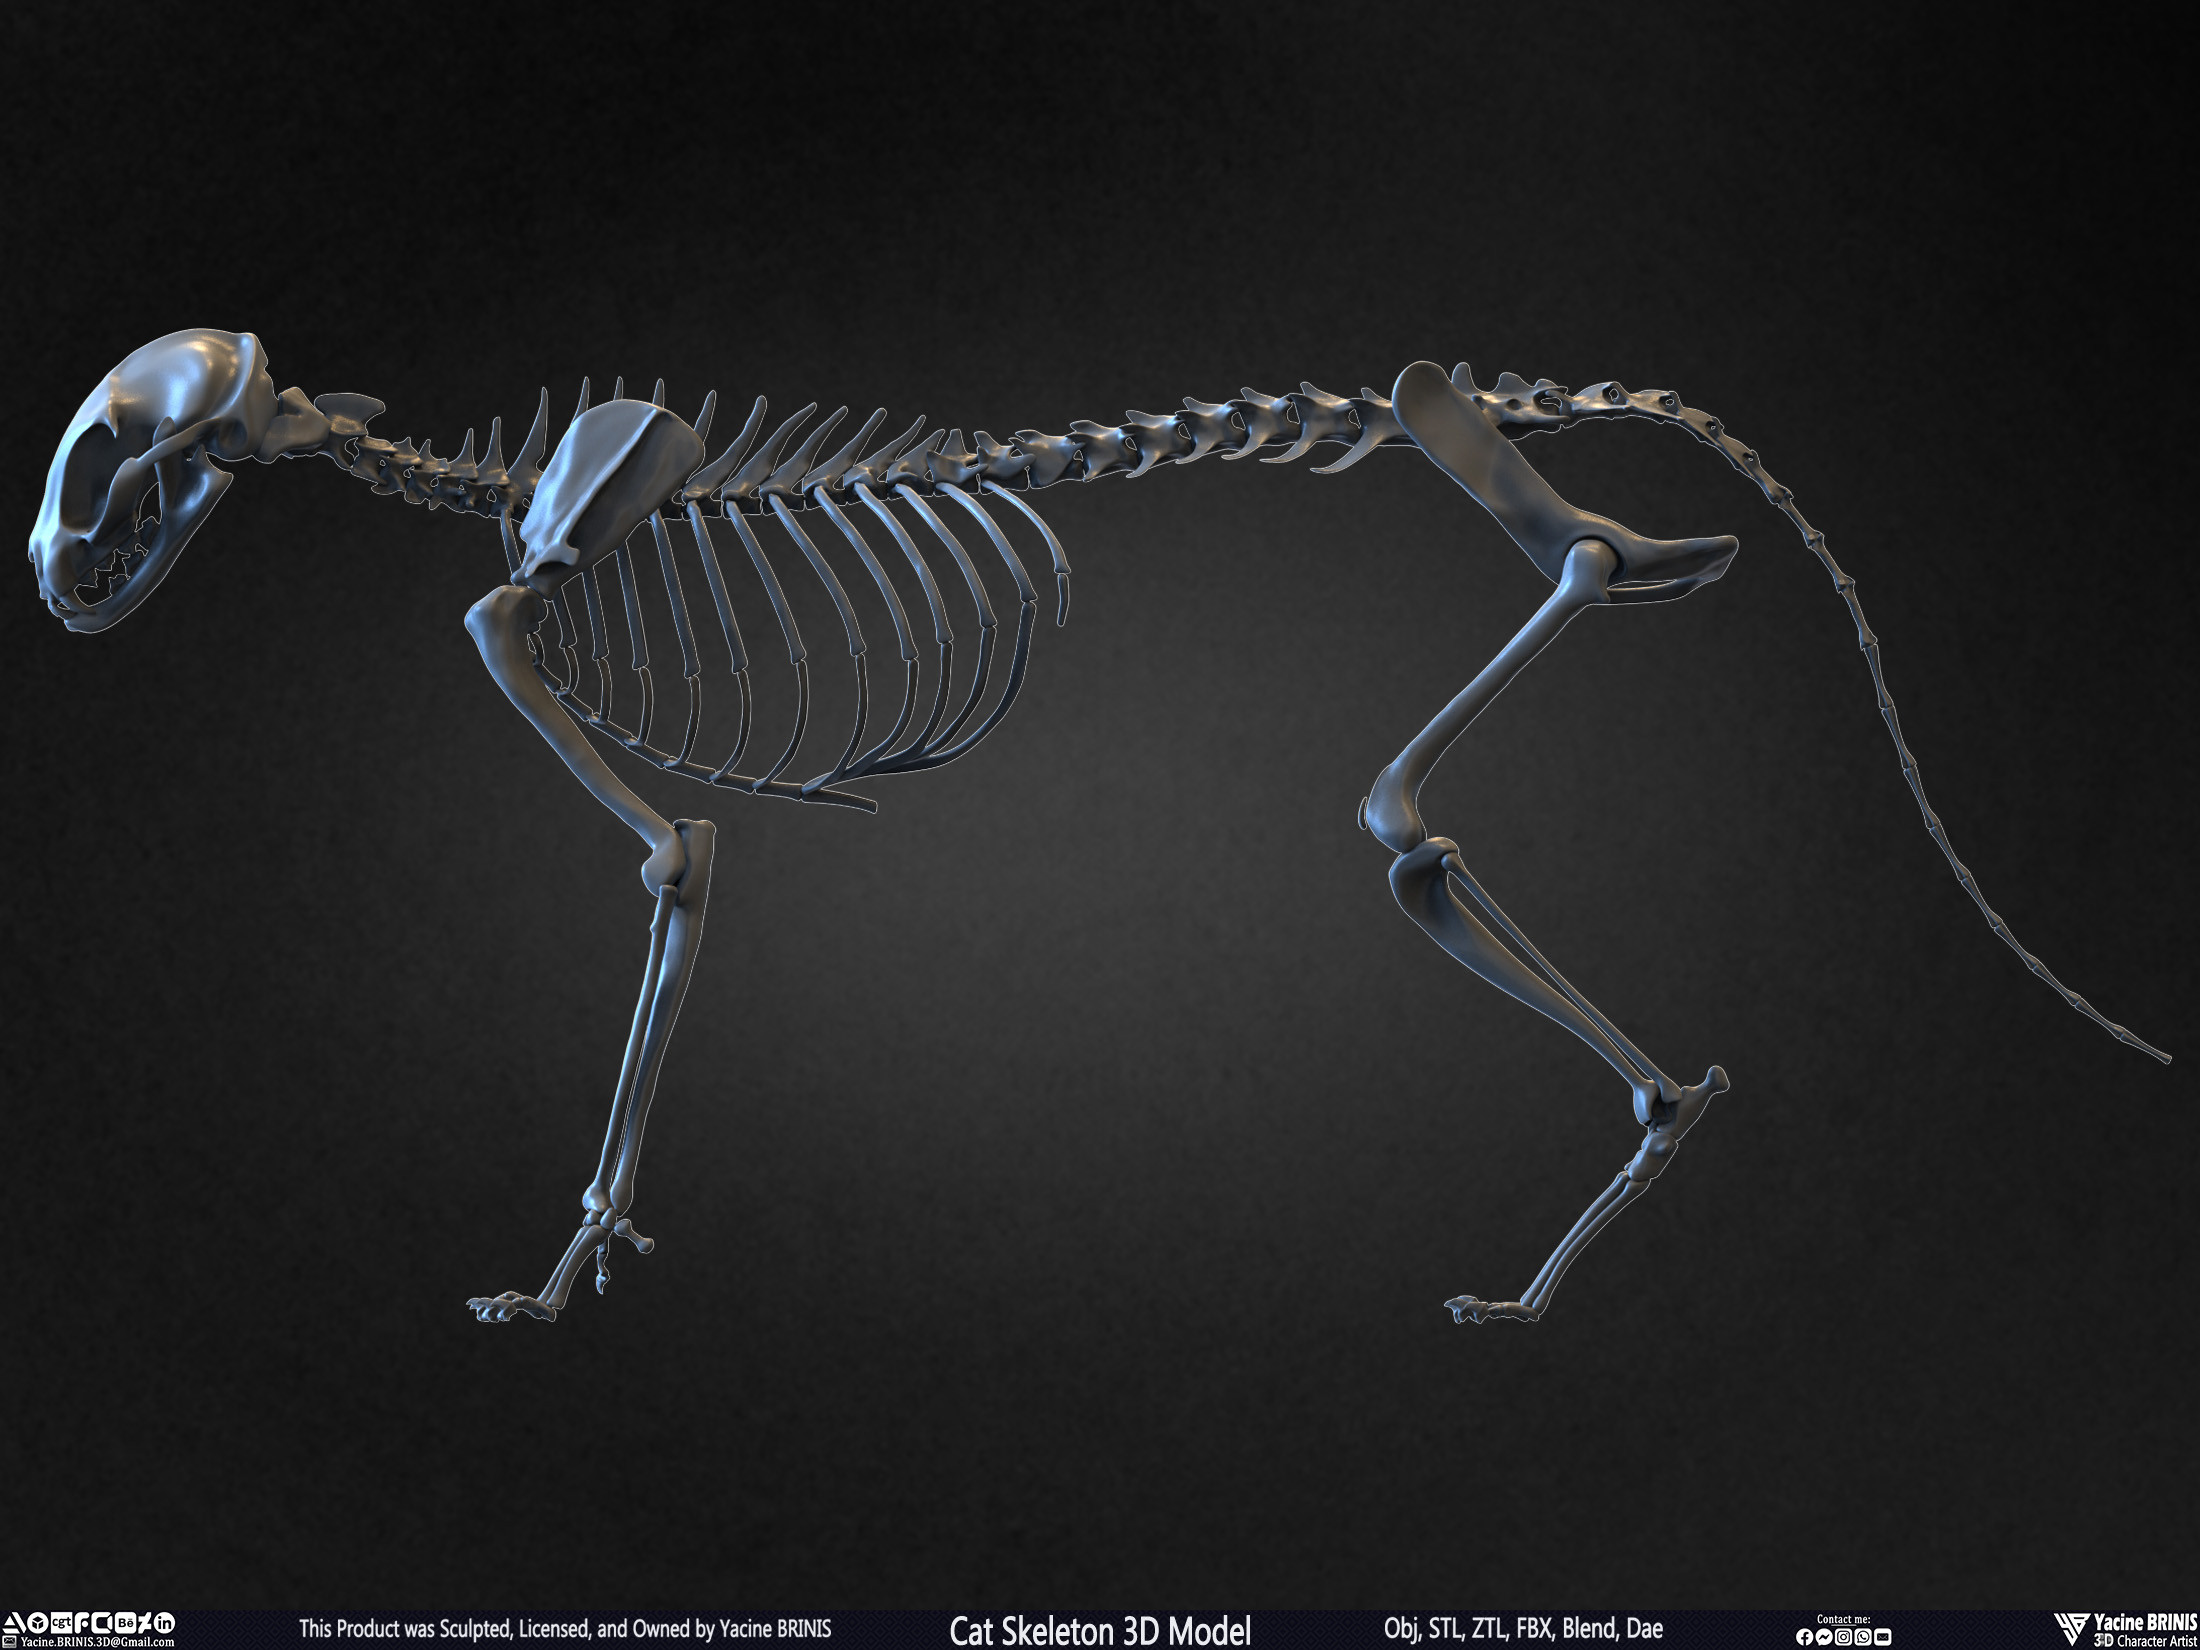 Highly Detailed Cat Skeleton 3D Model Sculpted by Yacine BRINIS Set 012